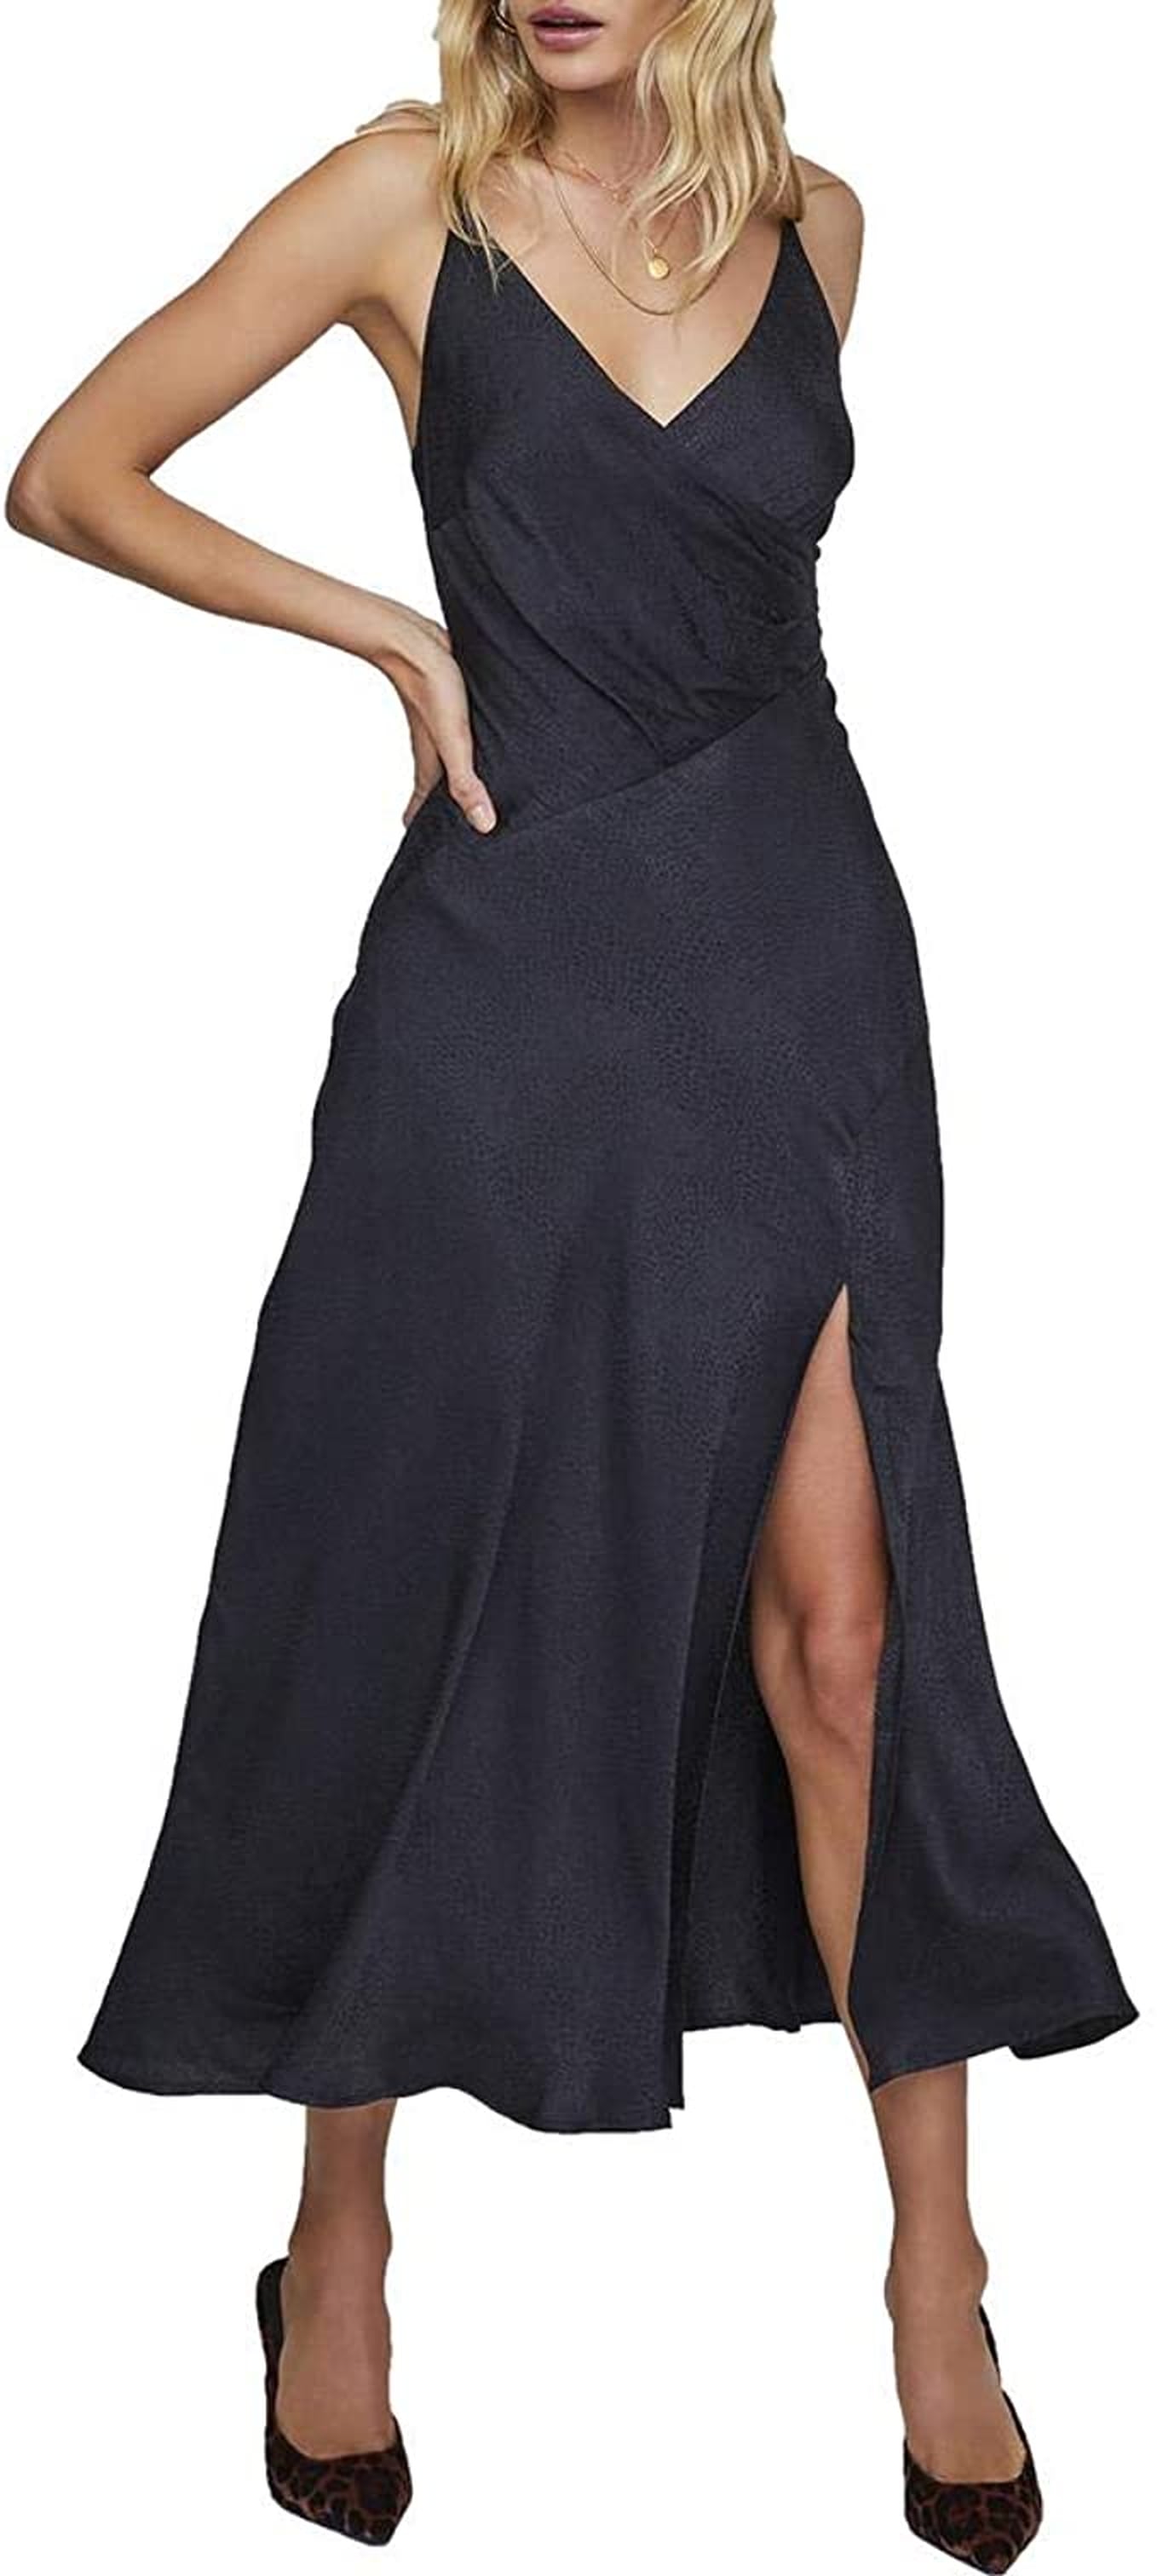 Sexy Summer Dresses on Amazon | POPSUGAR Fashion